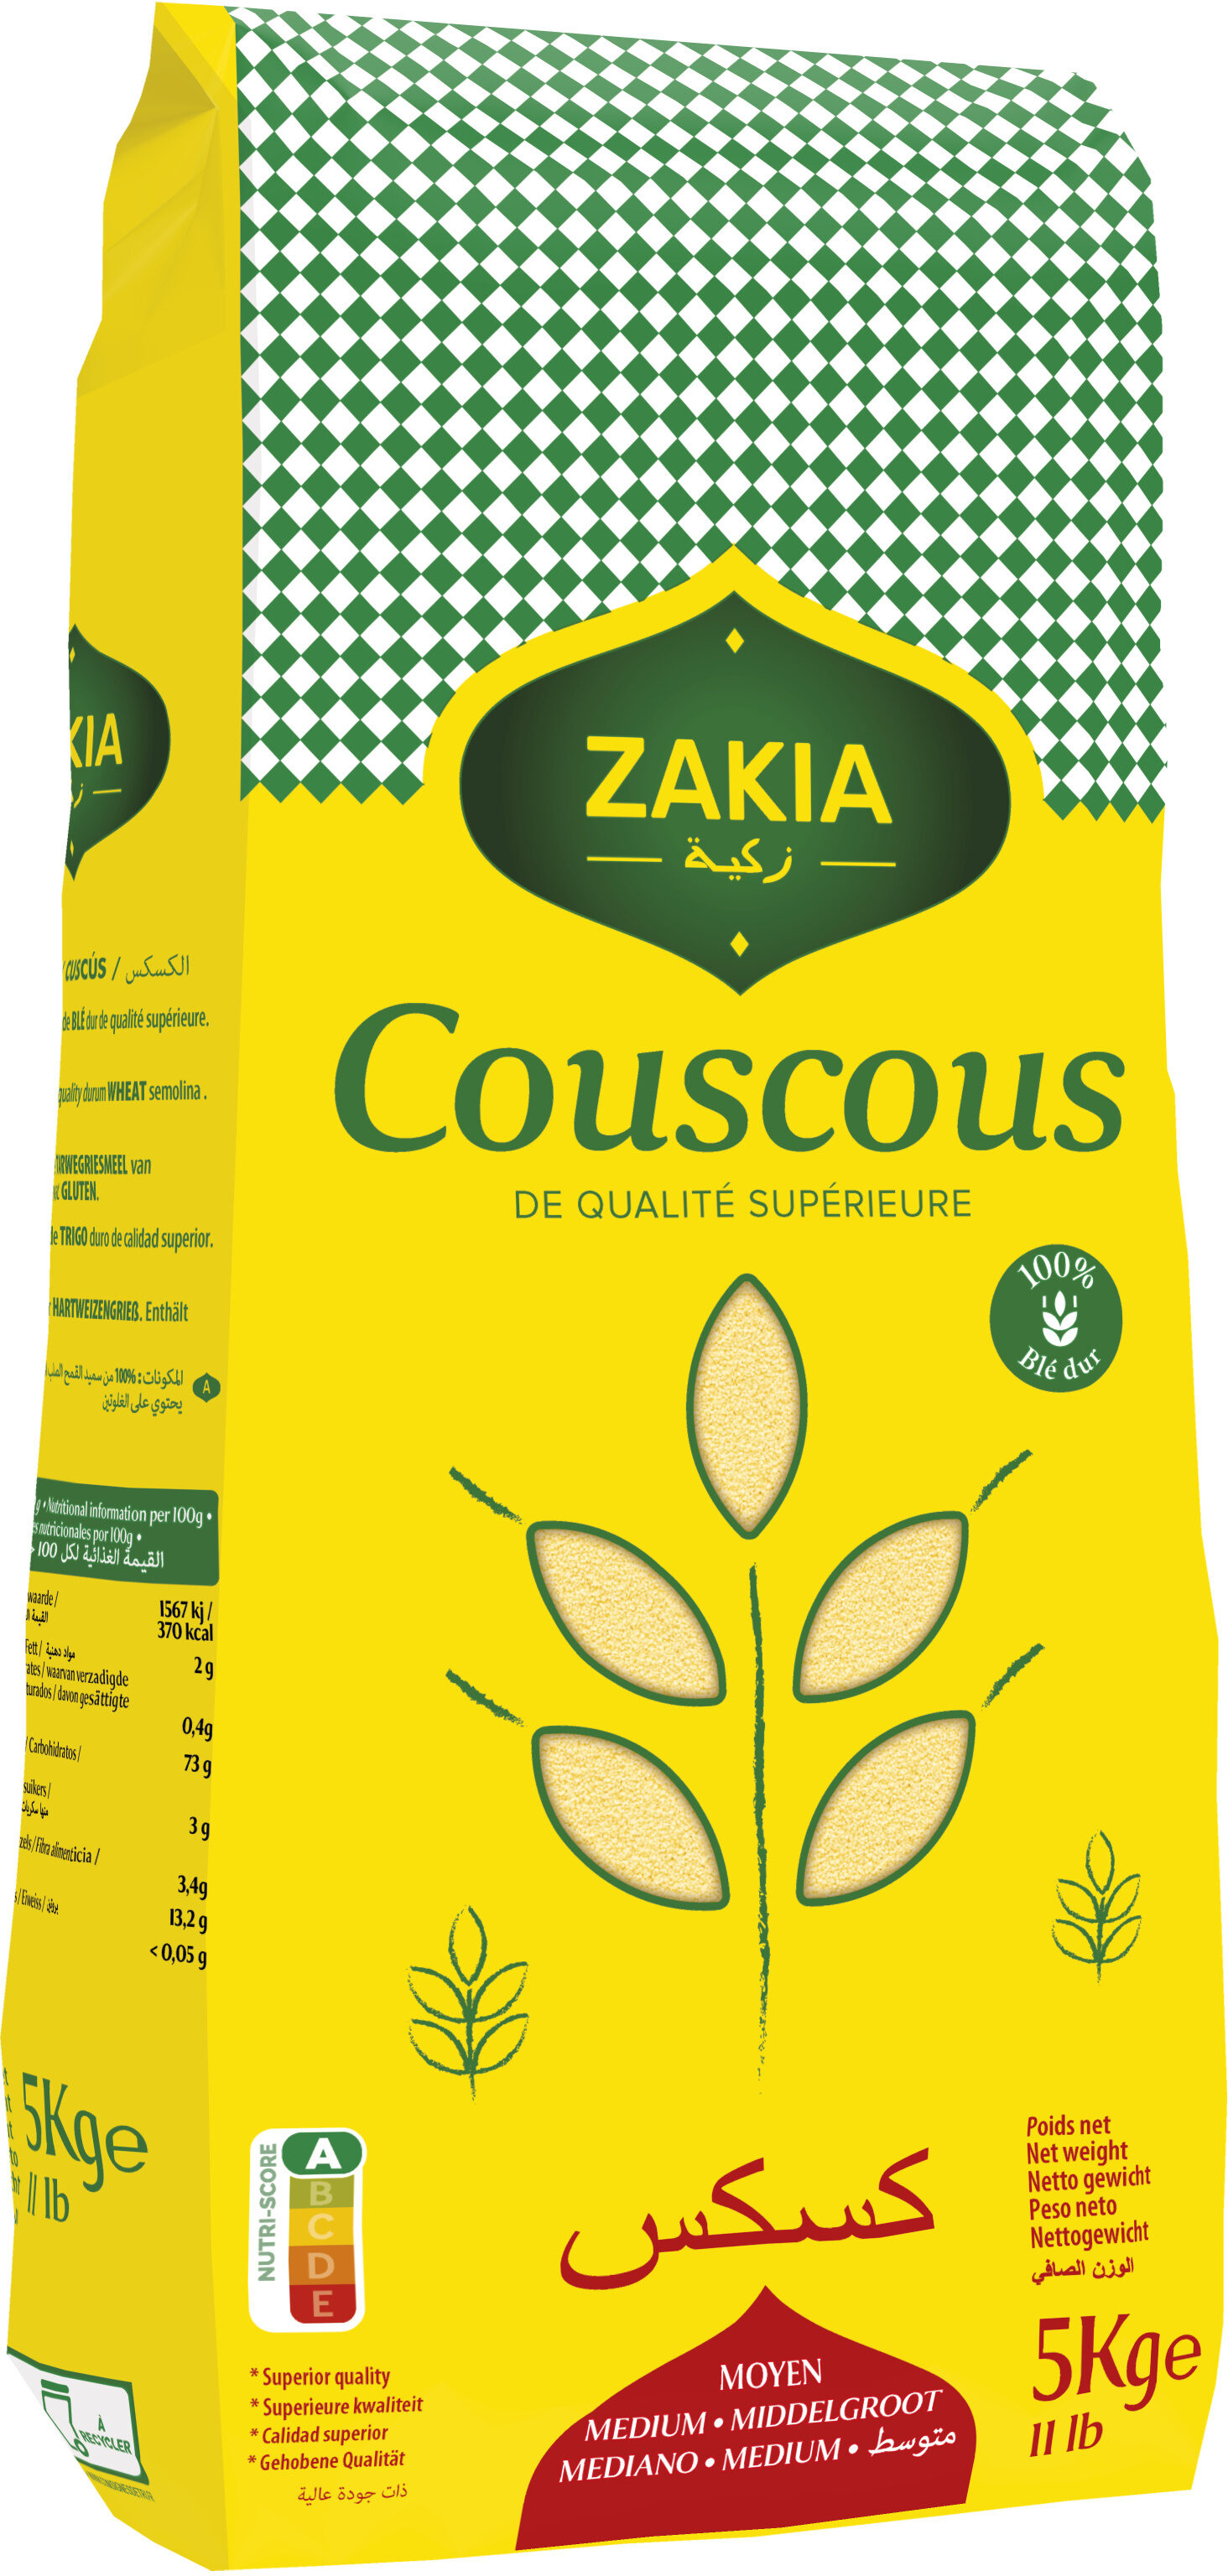 Zakia couscous moyen 5kg - Product - fr